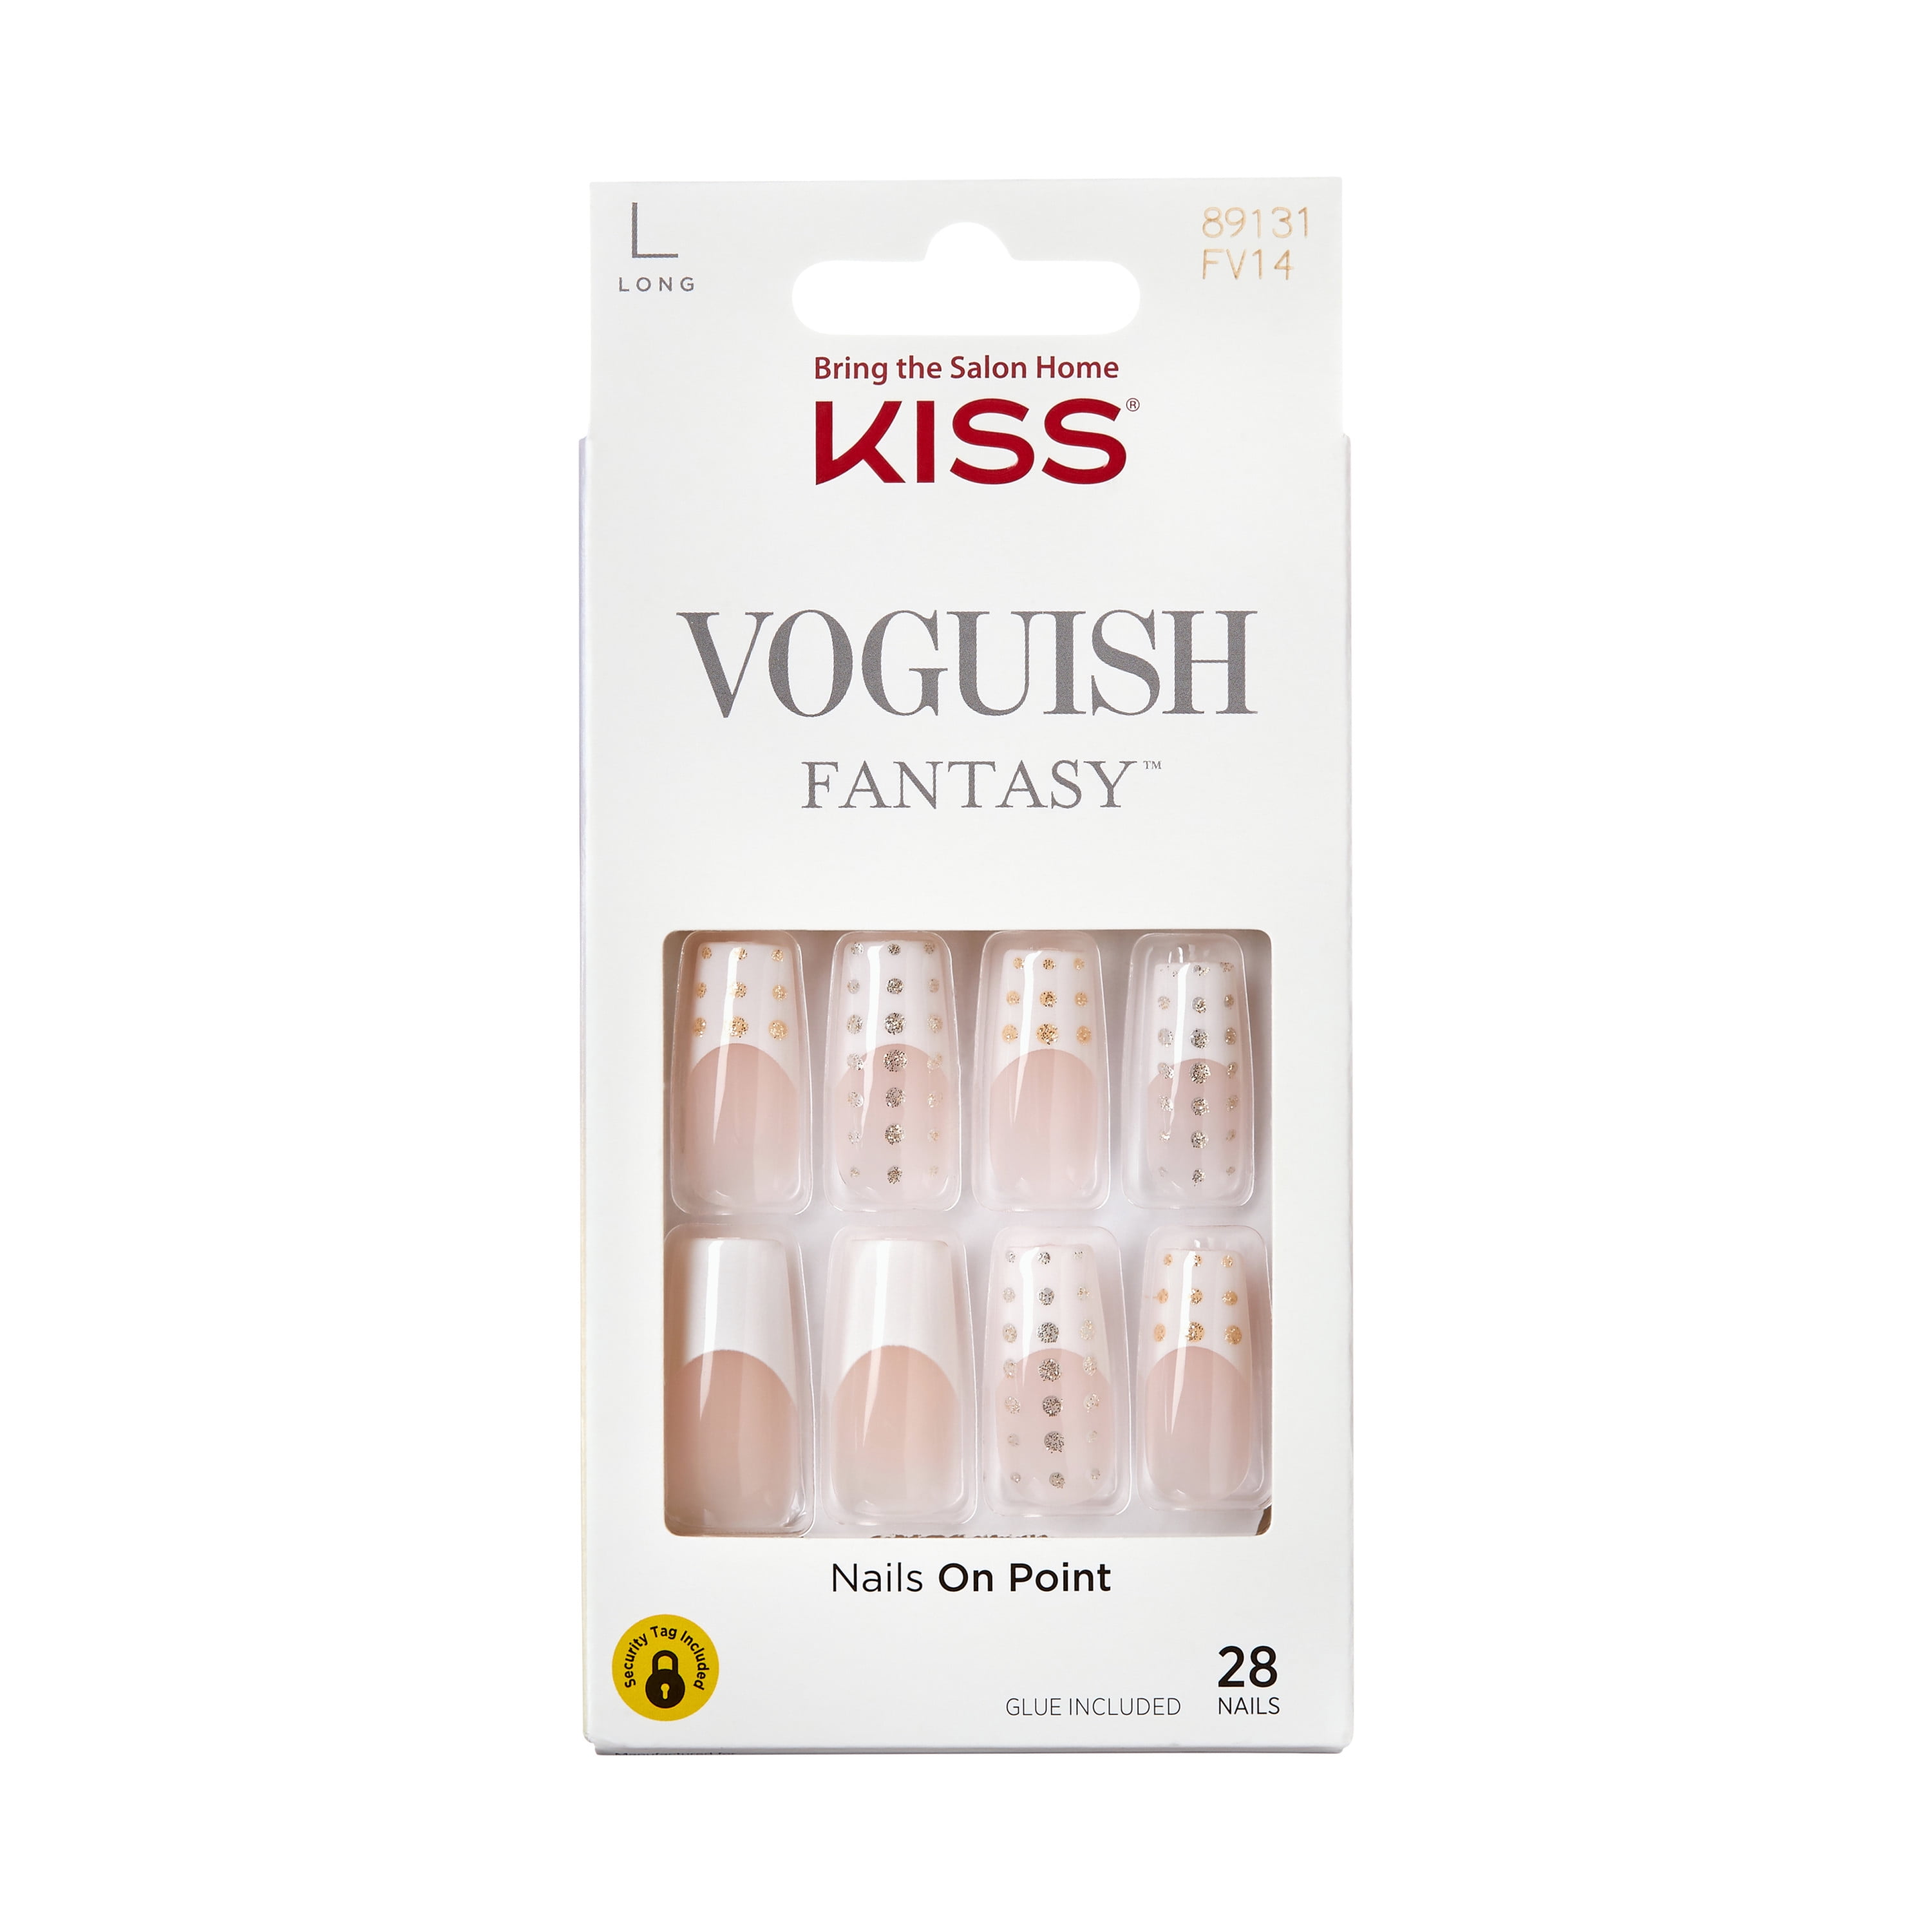 KISS Voguish Fantasy 'Intimidated' Fake Nails, White, Long Length ...